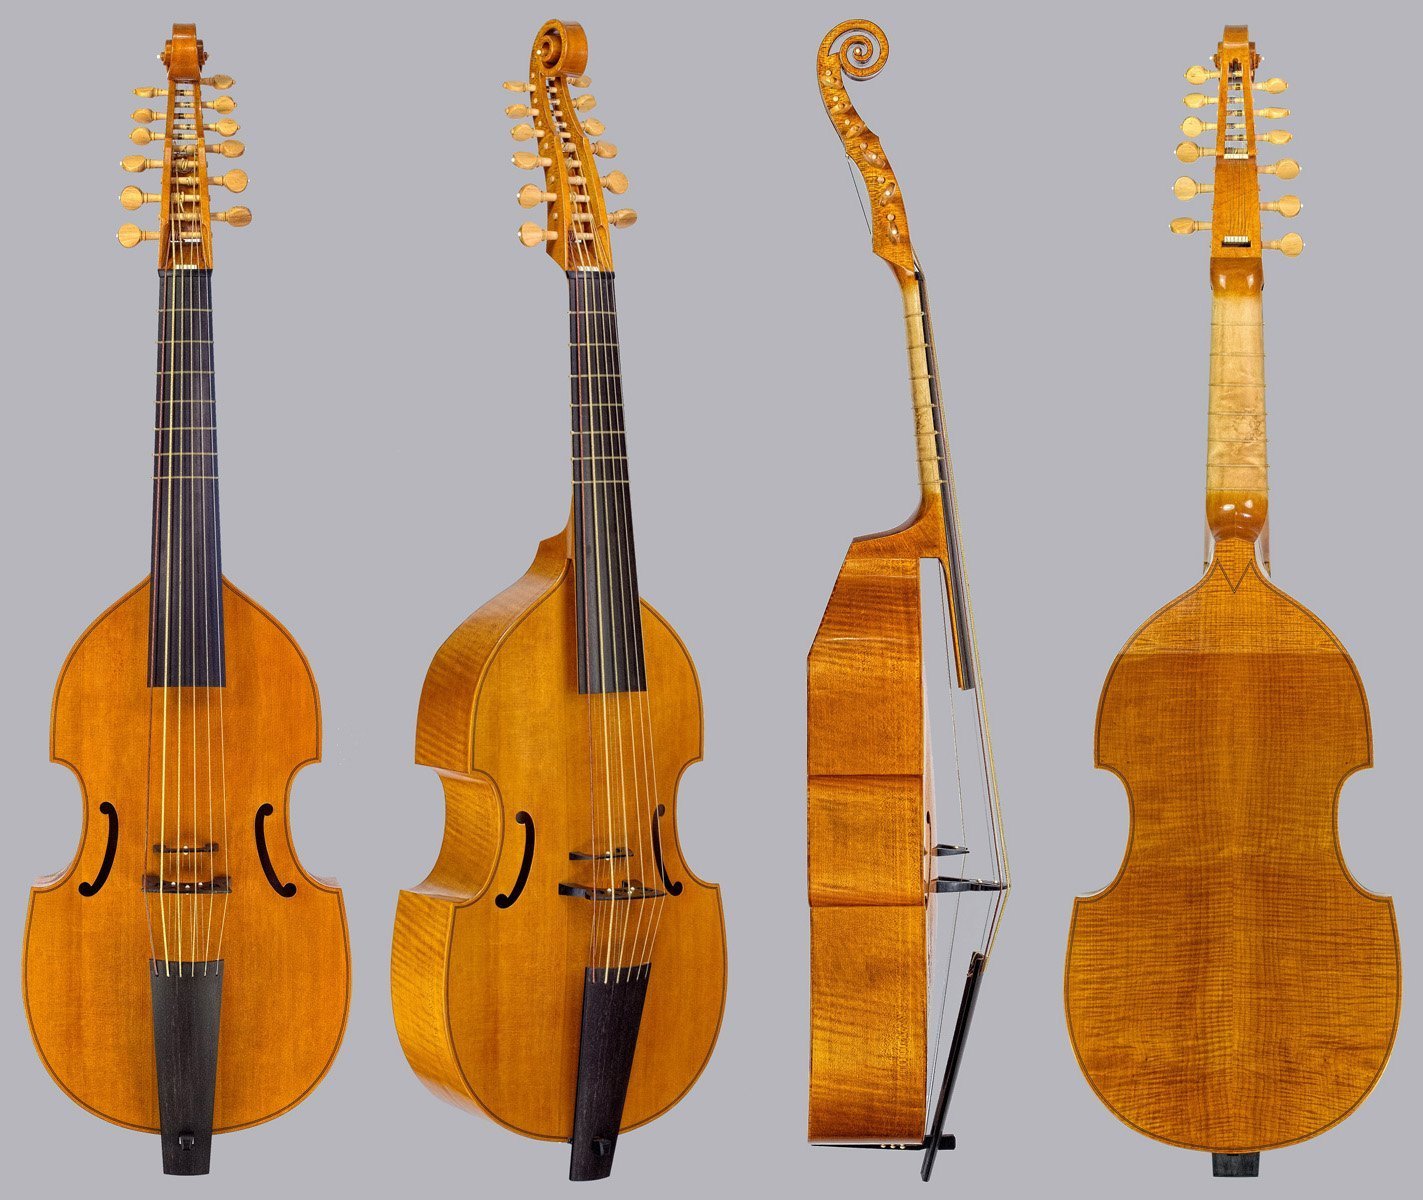 lyra viol with sympathetic strings